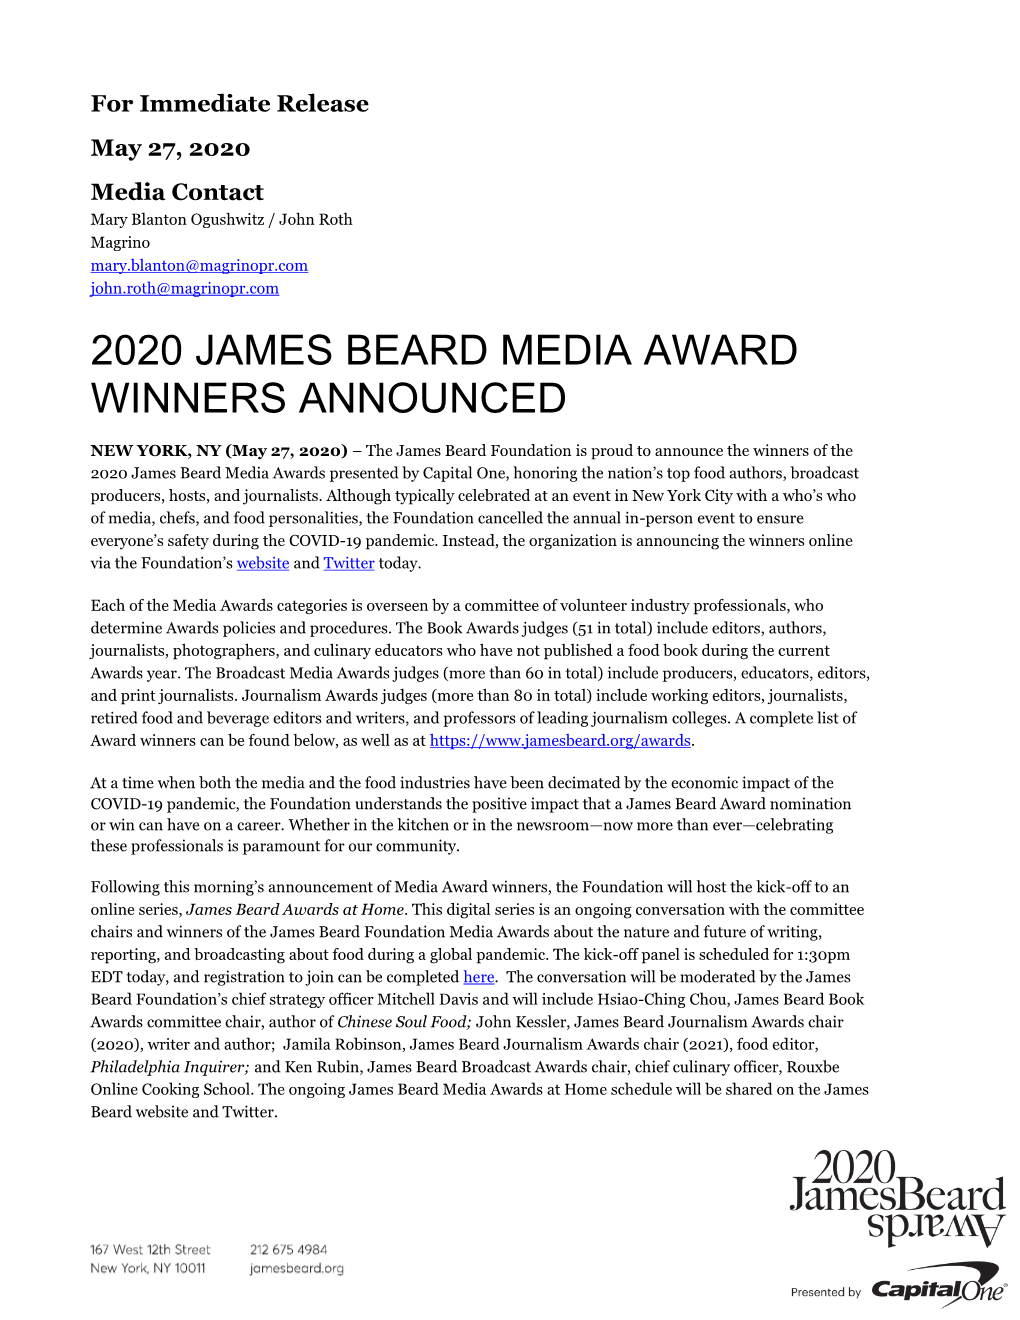 2020 James Beard Media Award Winners Announced